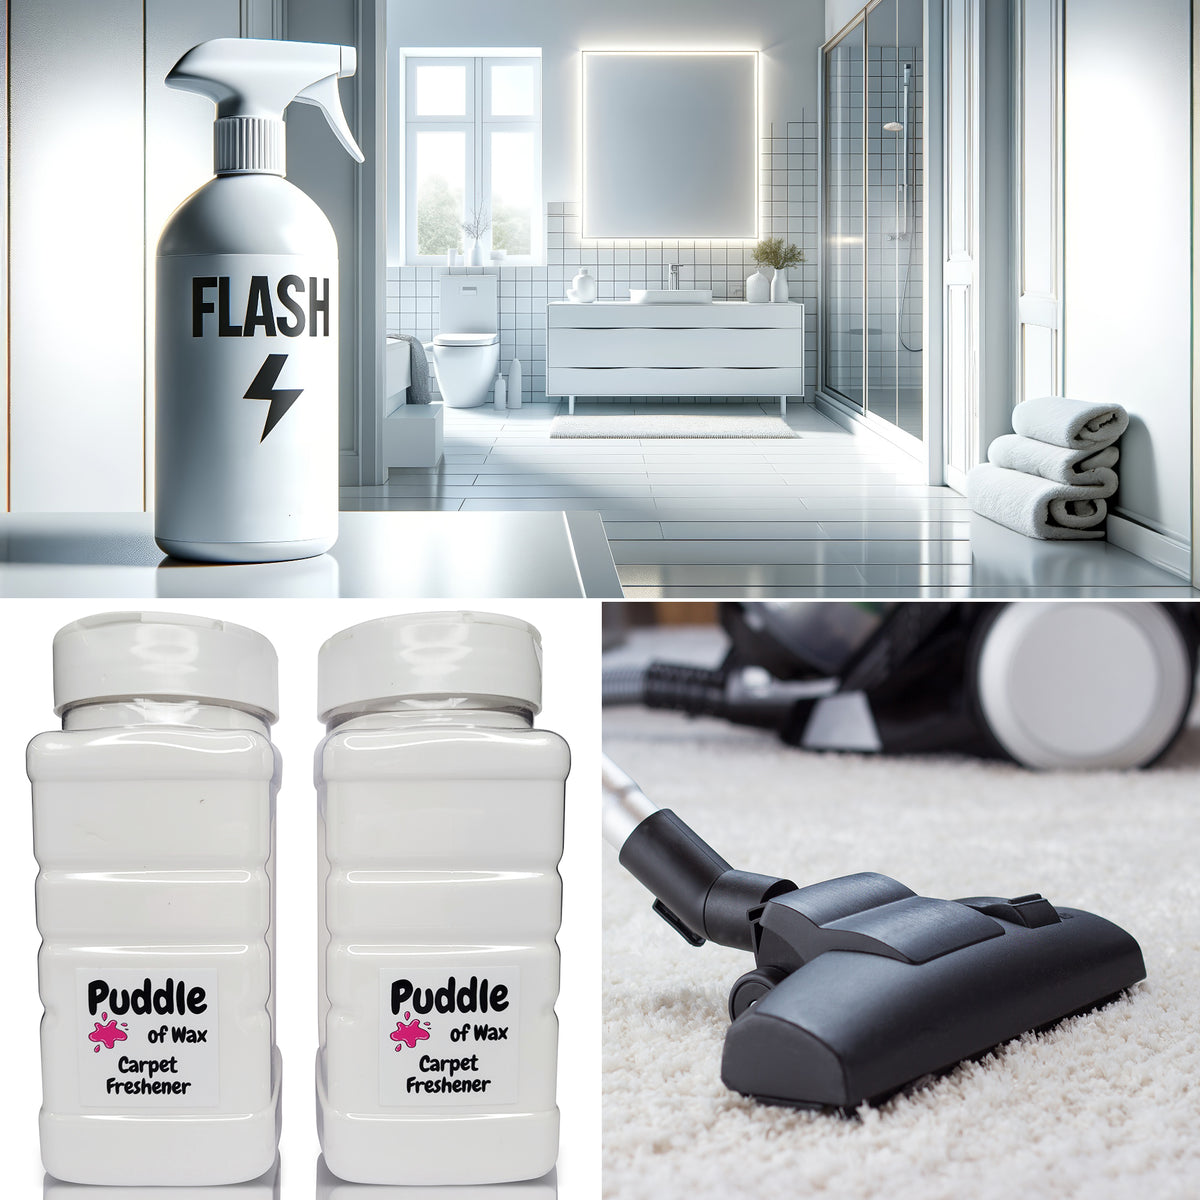 Flashy Bathroom Carpet Freshener